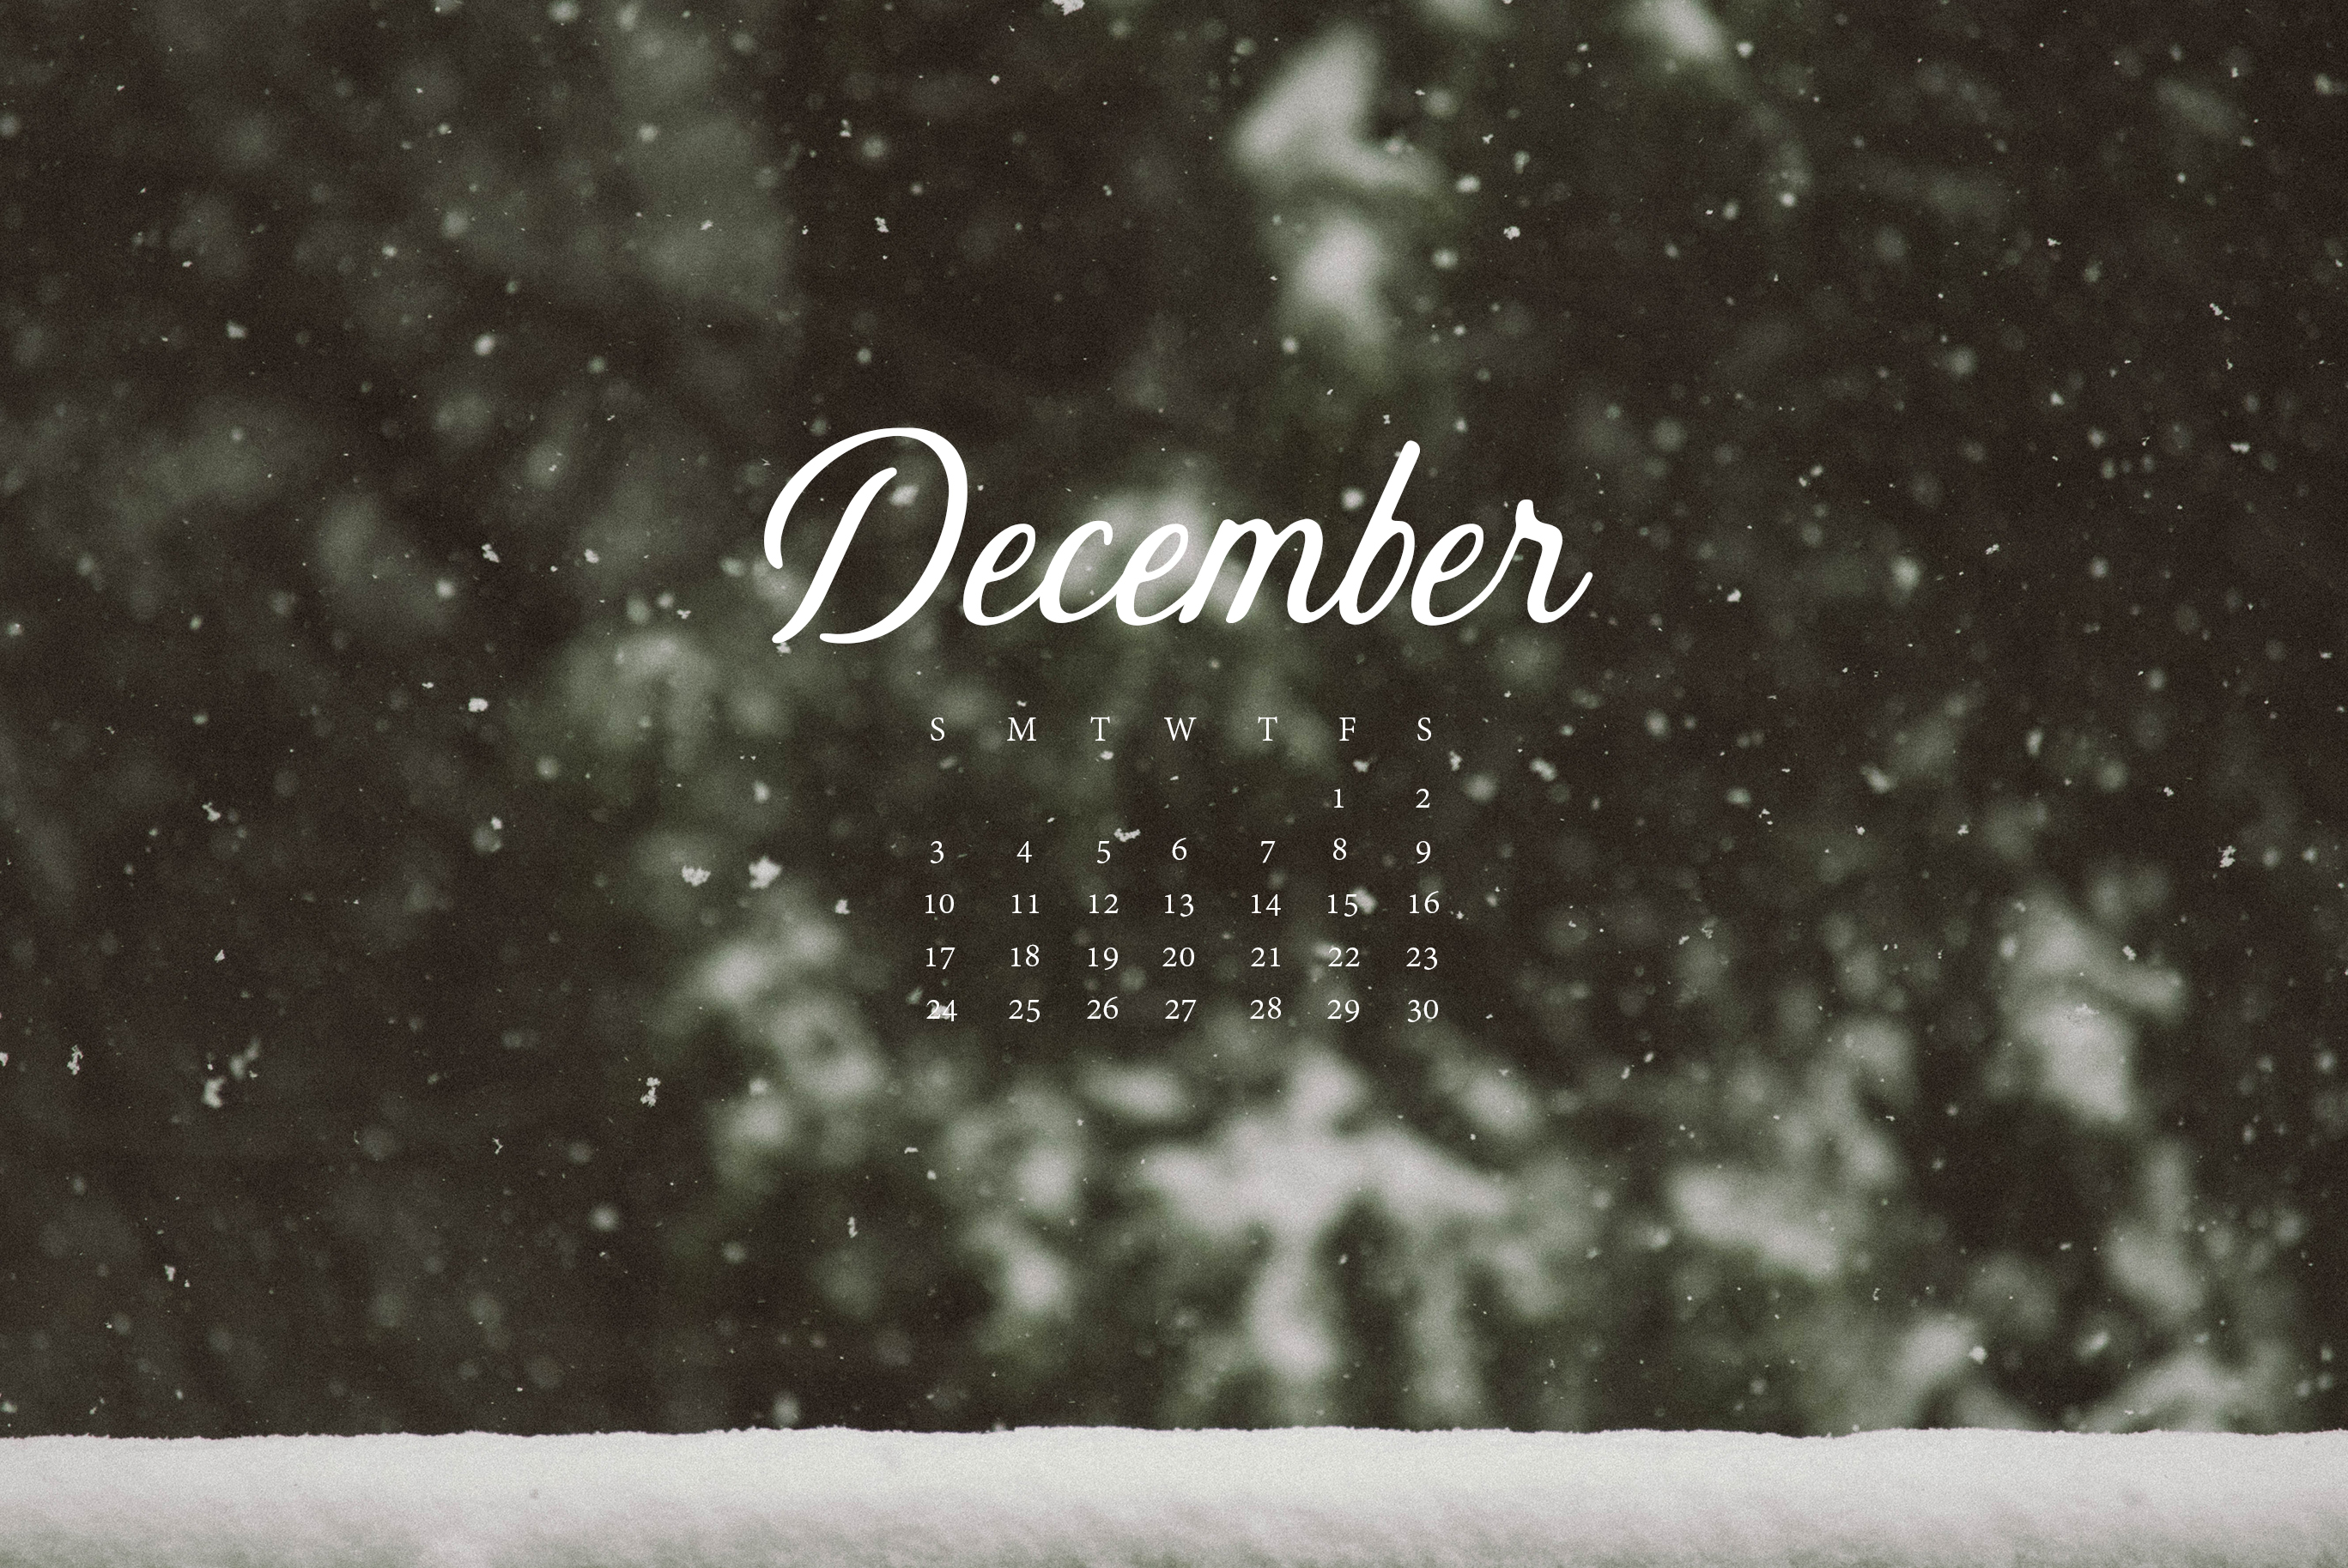 free-december-christmas-desktop-images